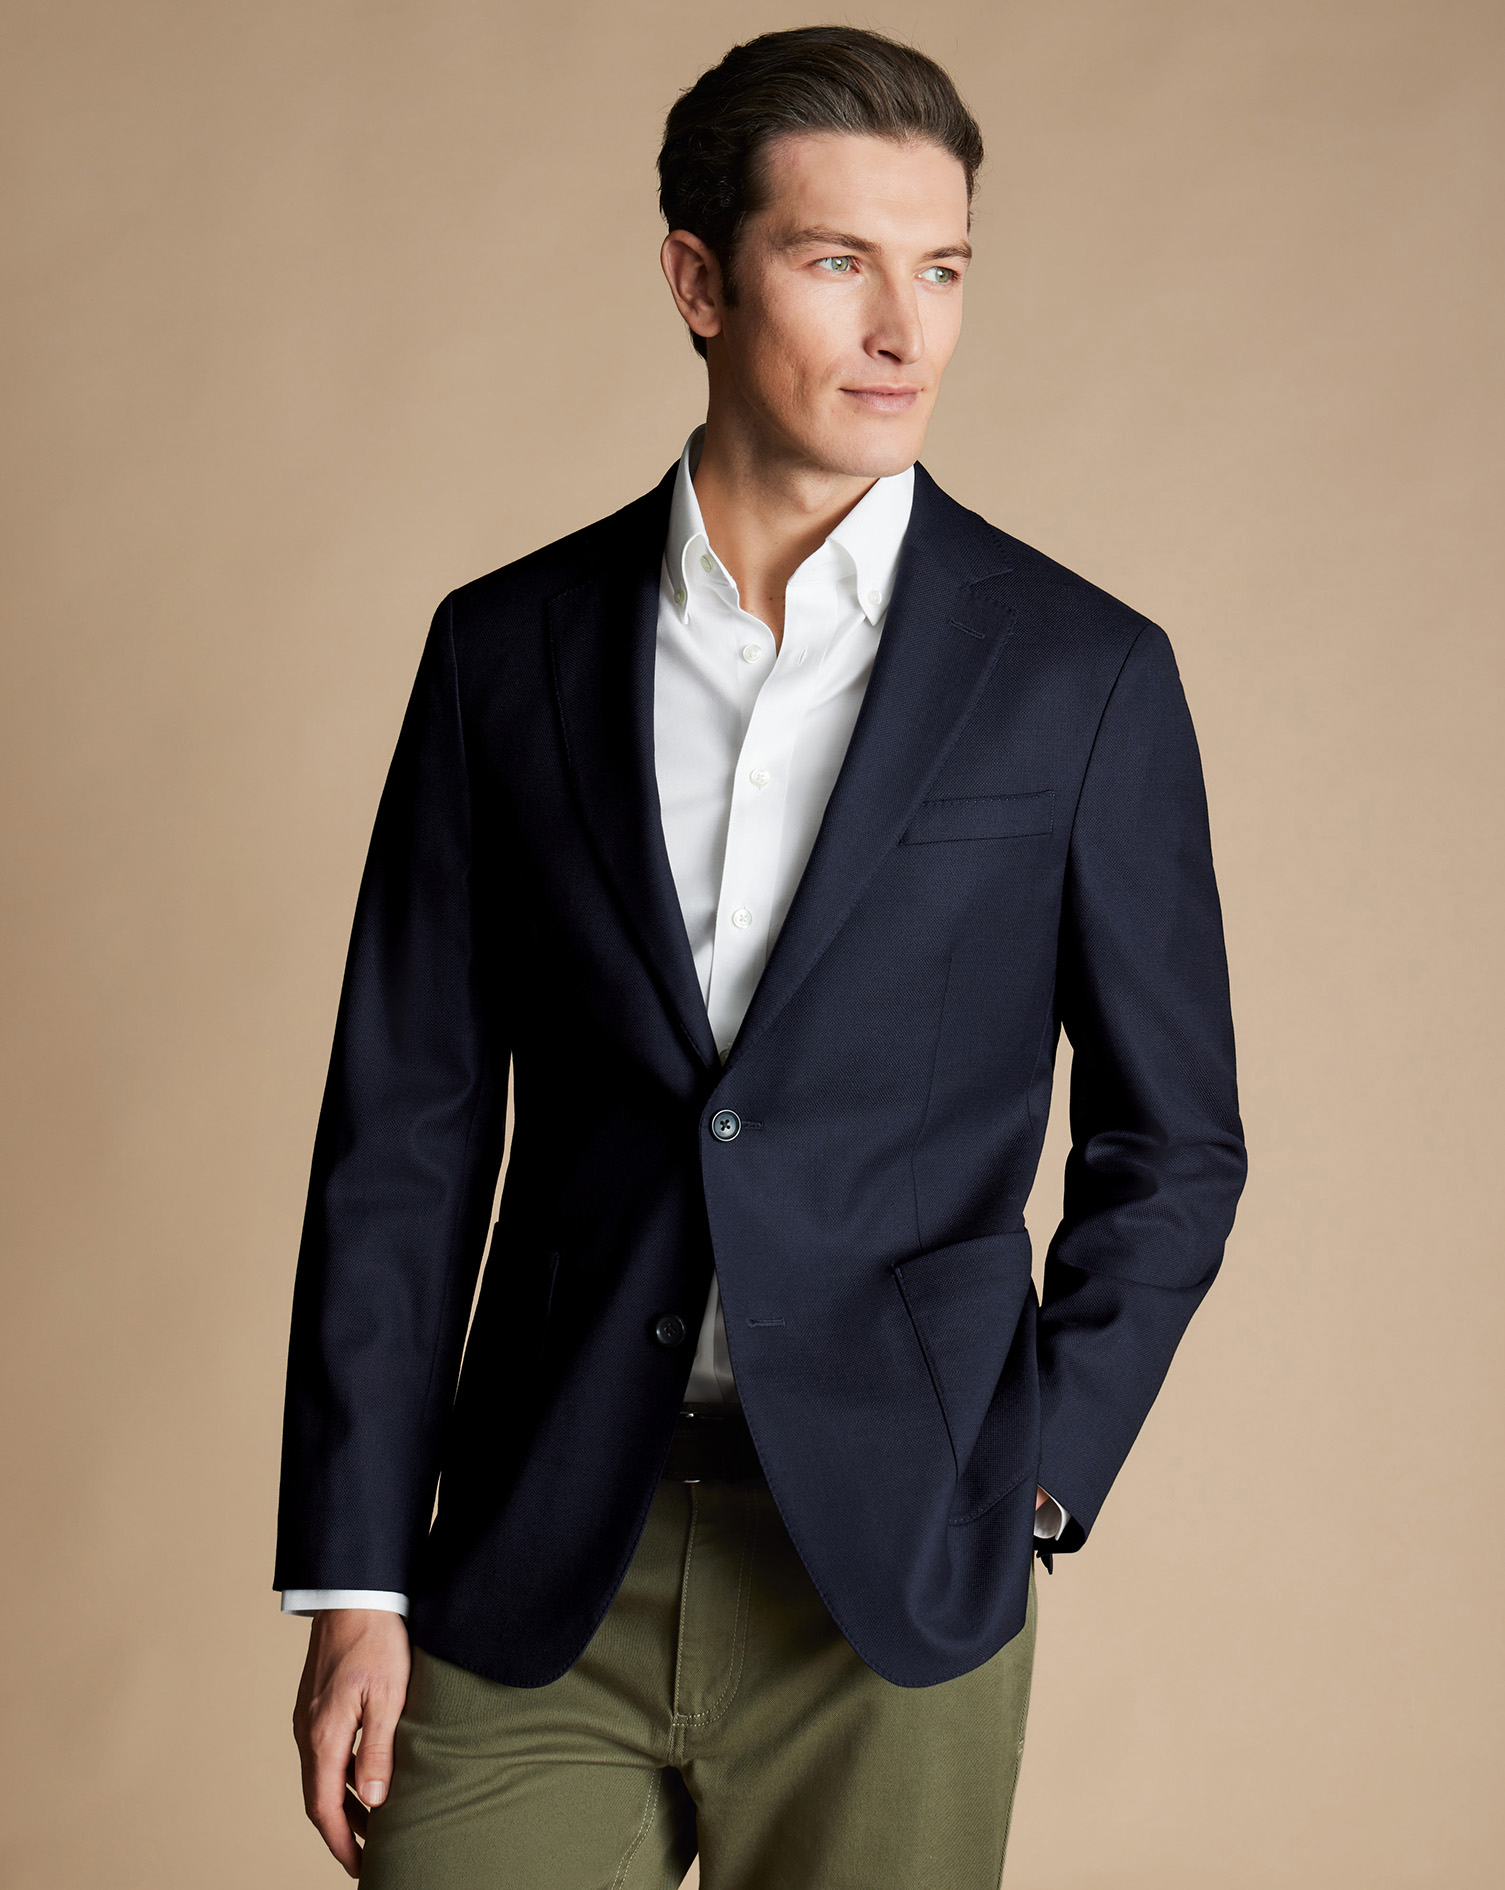 Men's Charles Tyrwhitt Luxury Italian Hopsack na Jacket - Navy Blue Size 36R Wool
